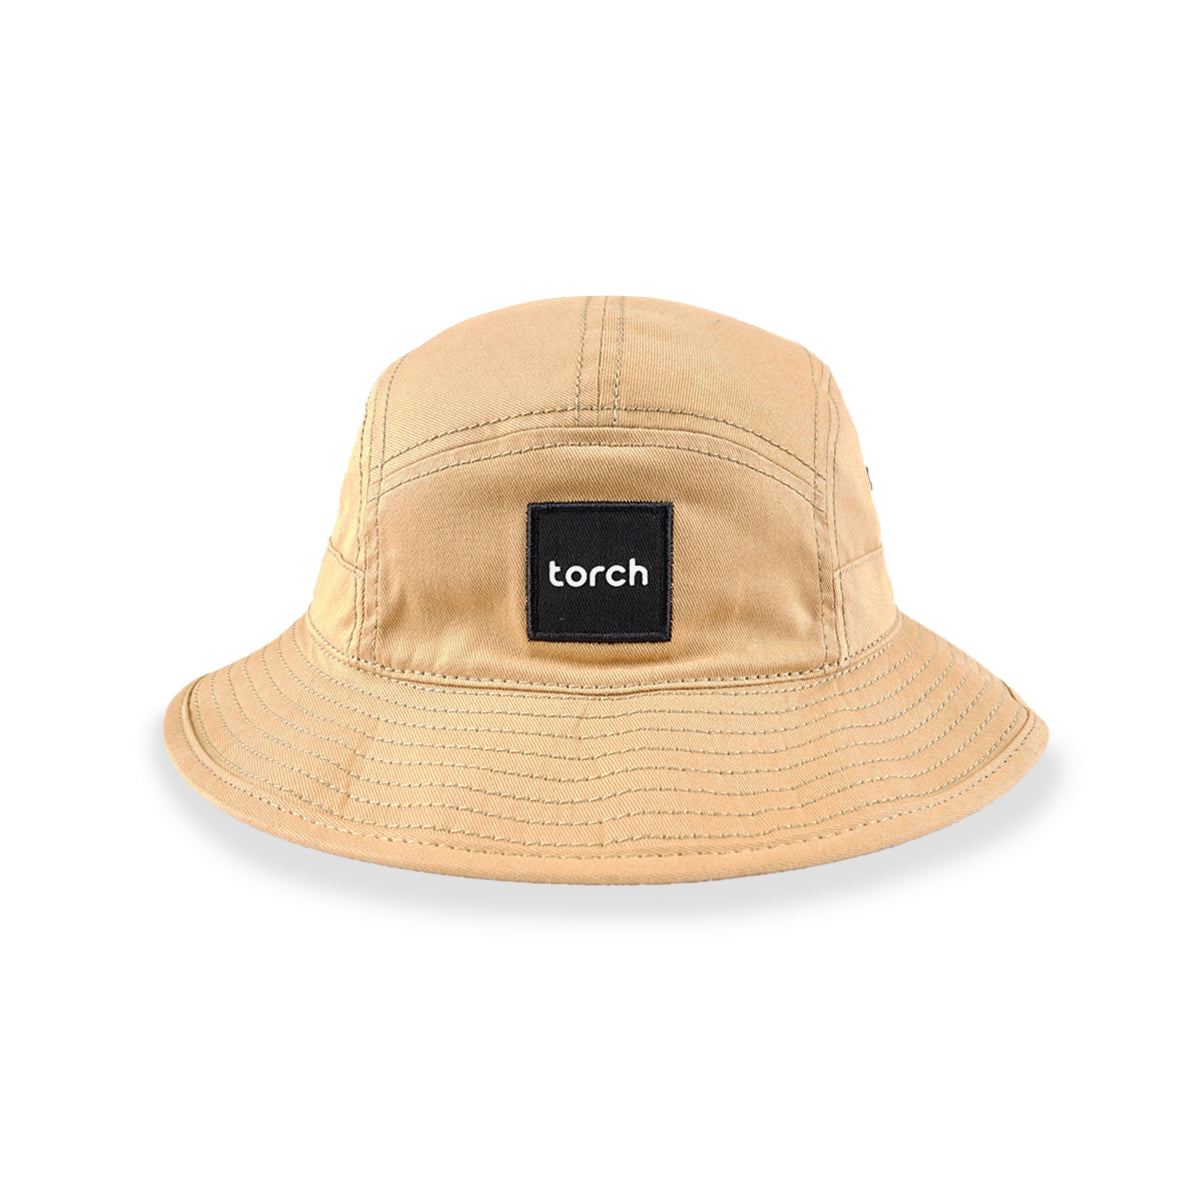 Enggano Bucket Hat